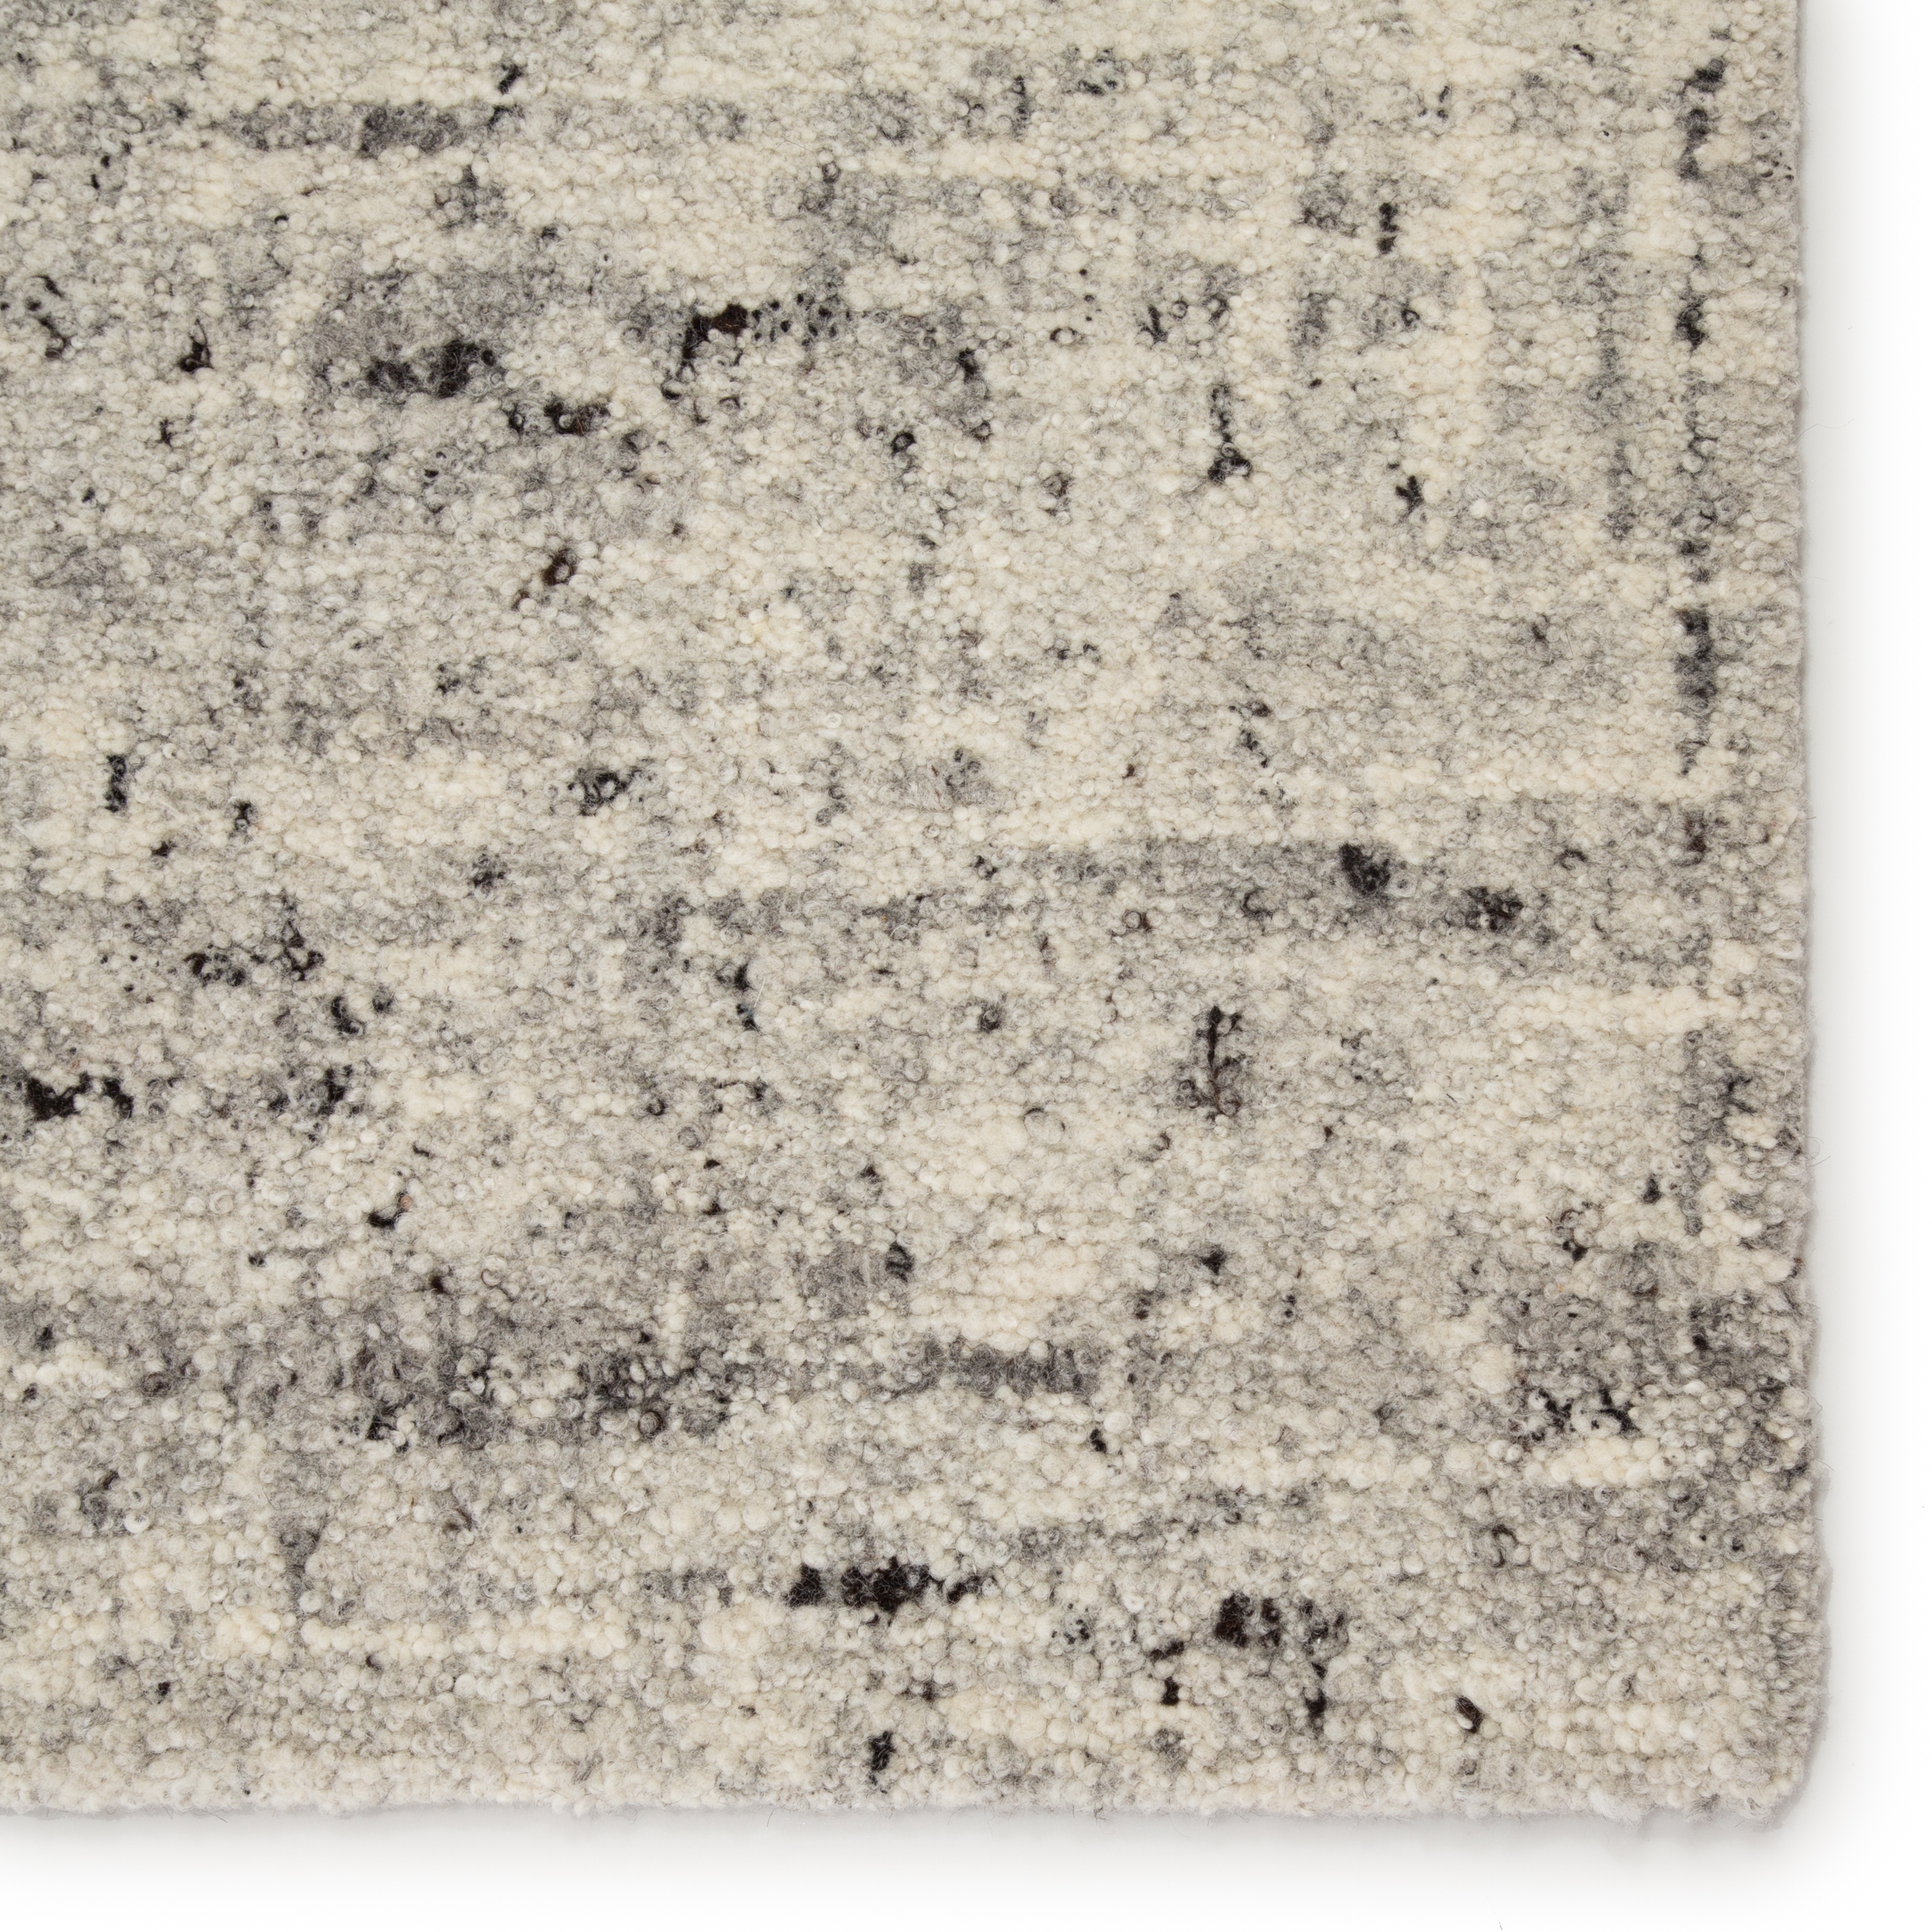 Macklin Rug, Ivory & Gray, 9' x 12' - Image 3